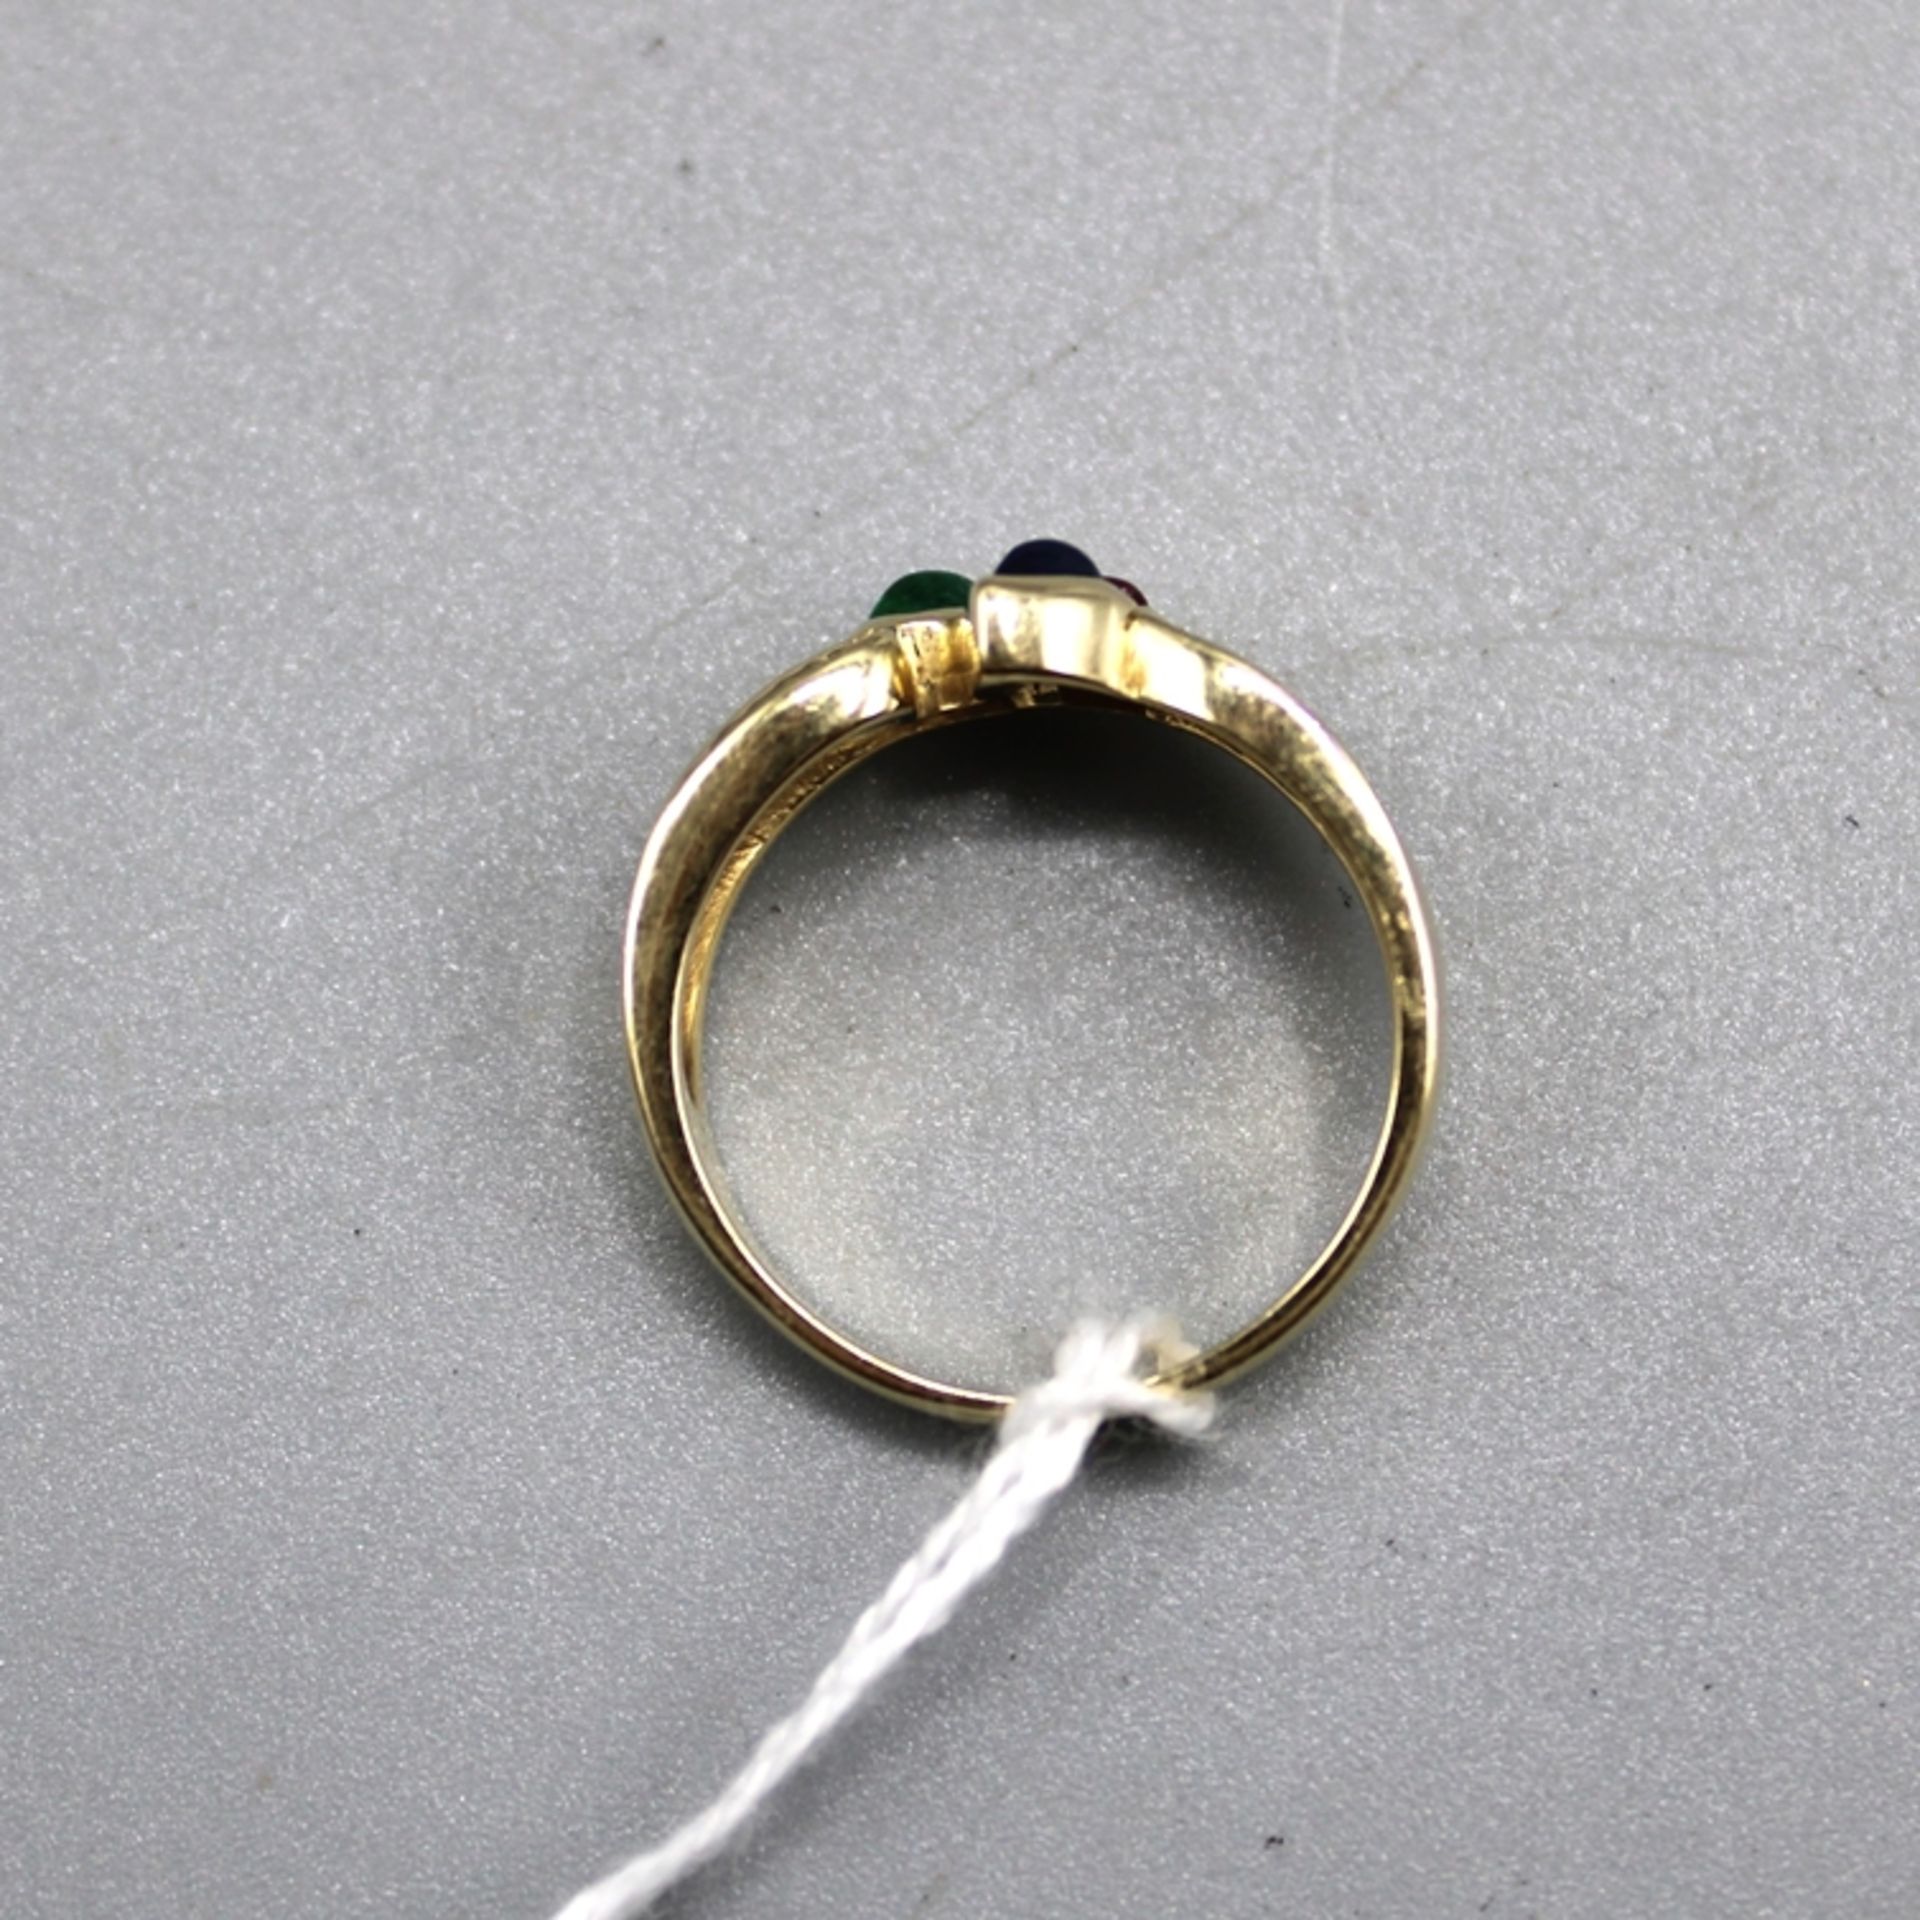 Goldring 585 m. farbigen Edelsteinen, Smaragd Saphir Rubin seitl. kl. Diamanten, Ring Ø ca. 17,5 mm - Bild 2 aus 2